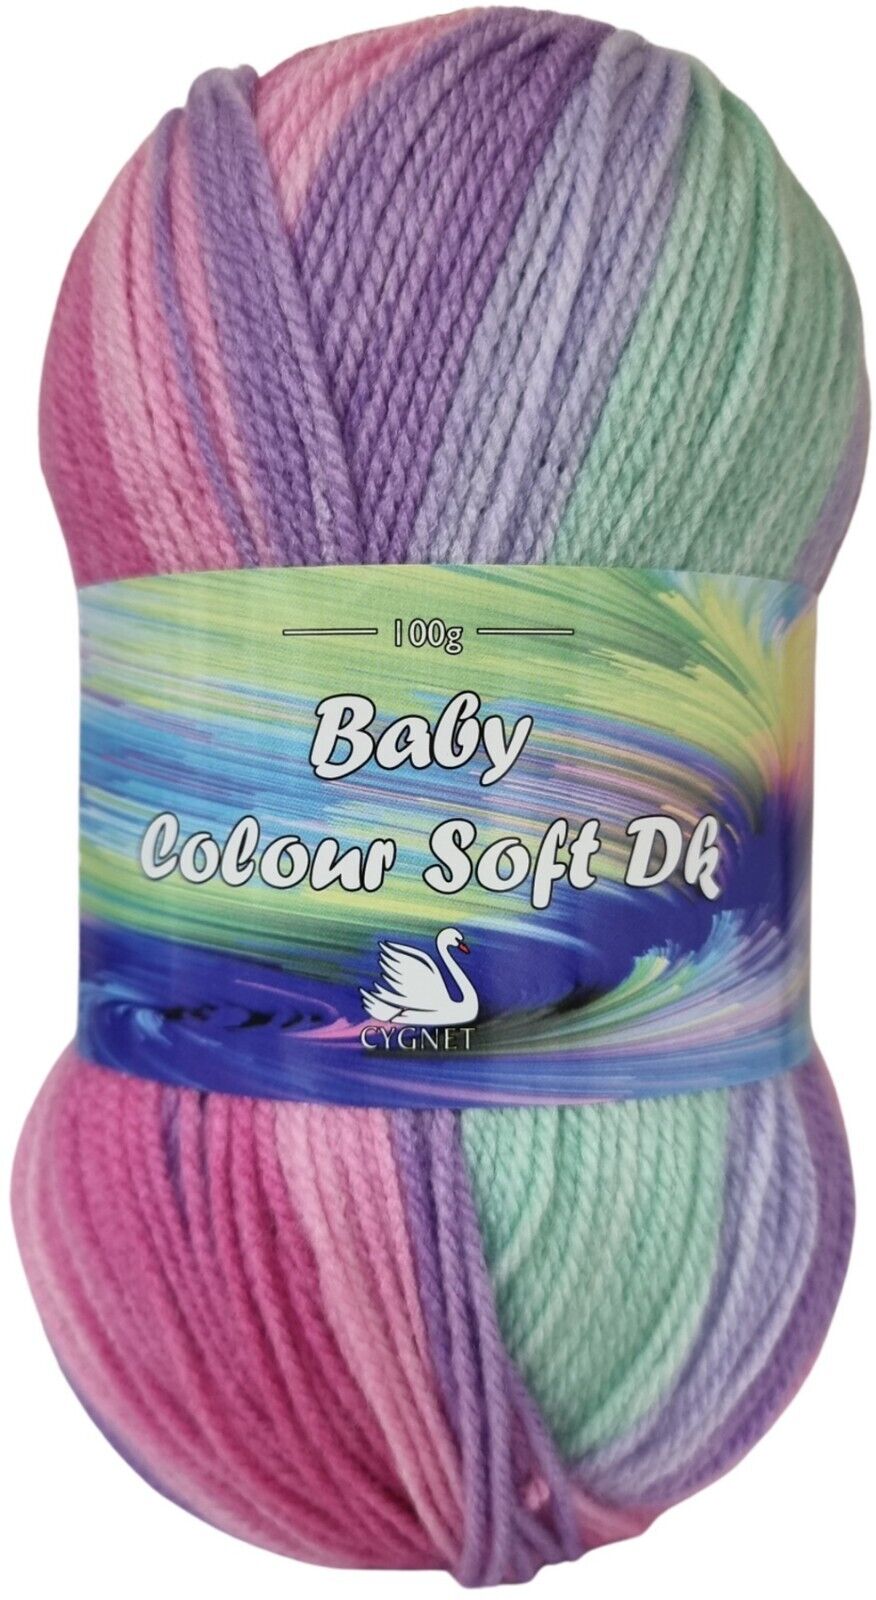 Cygnet BABY COLOUR SOFT DK Knitting Yarn / Wool - 100g - Pastel Sorbet